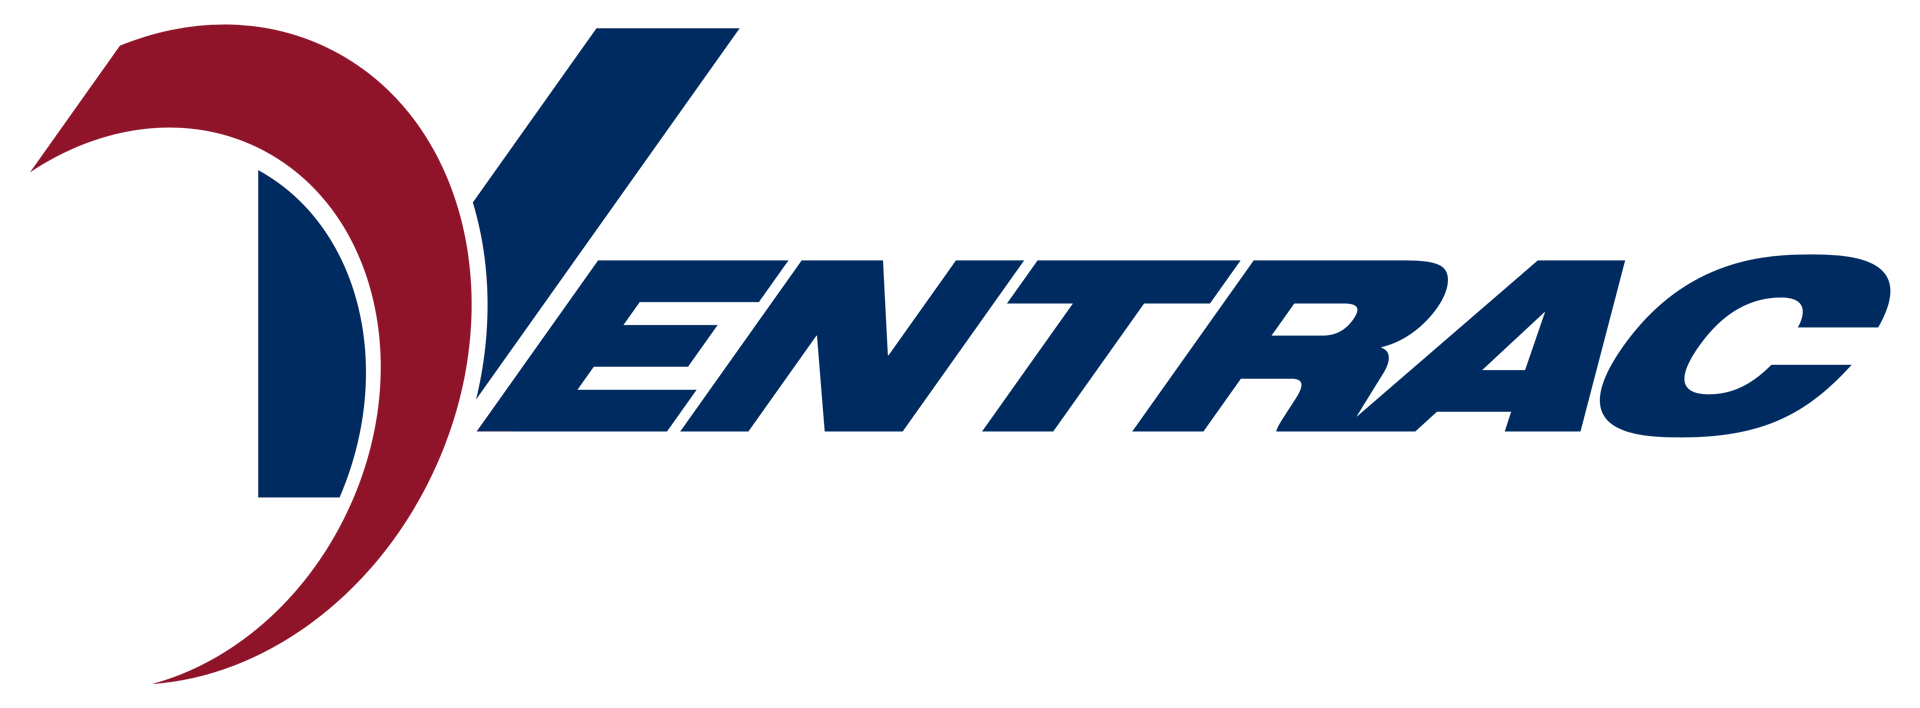 Ventrac Logo